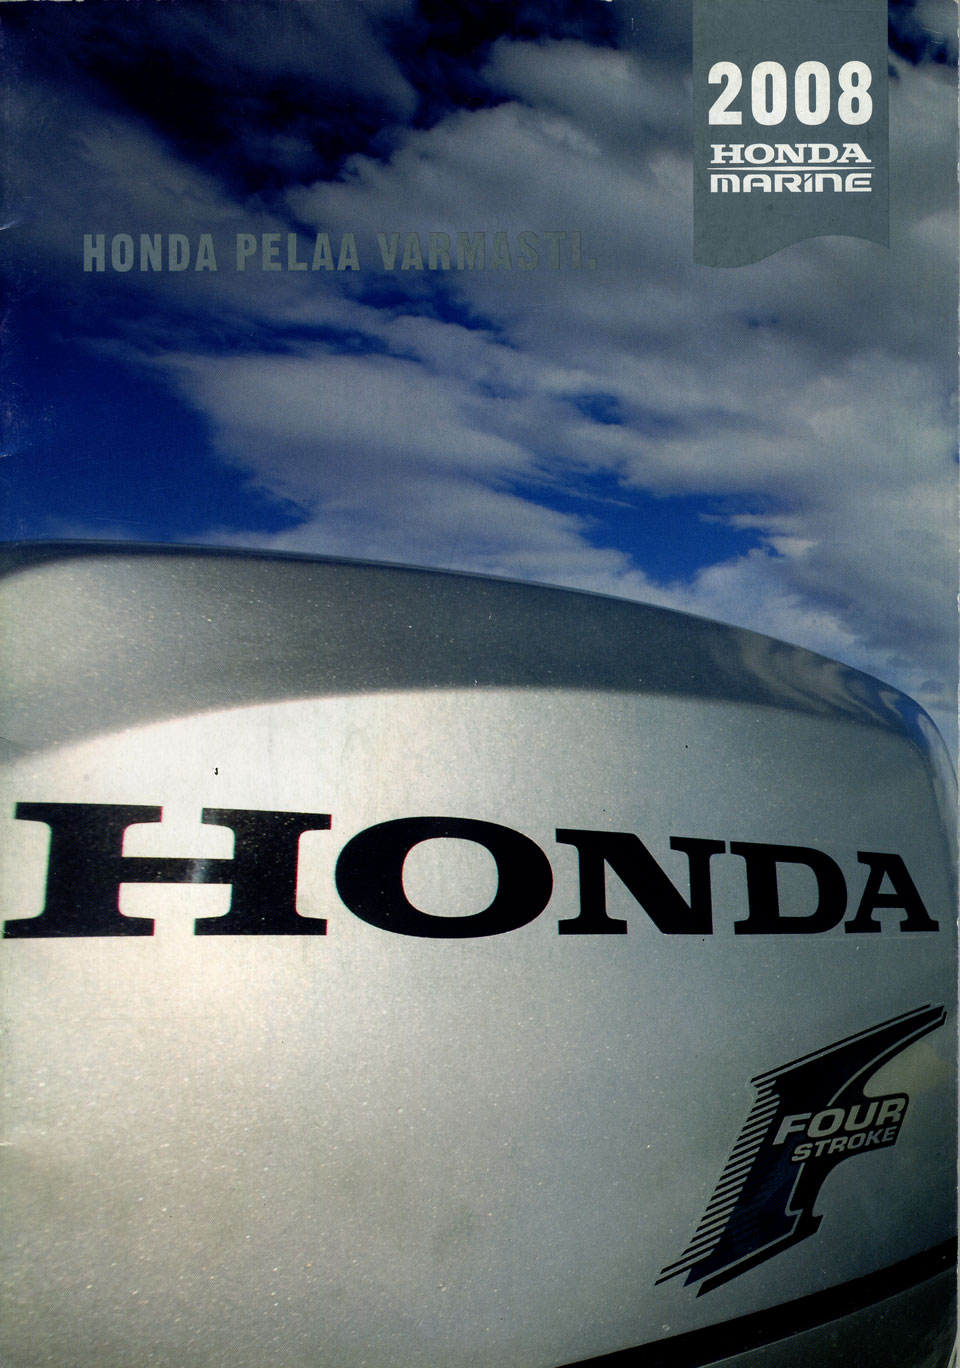 booklet outboard honda 2008